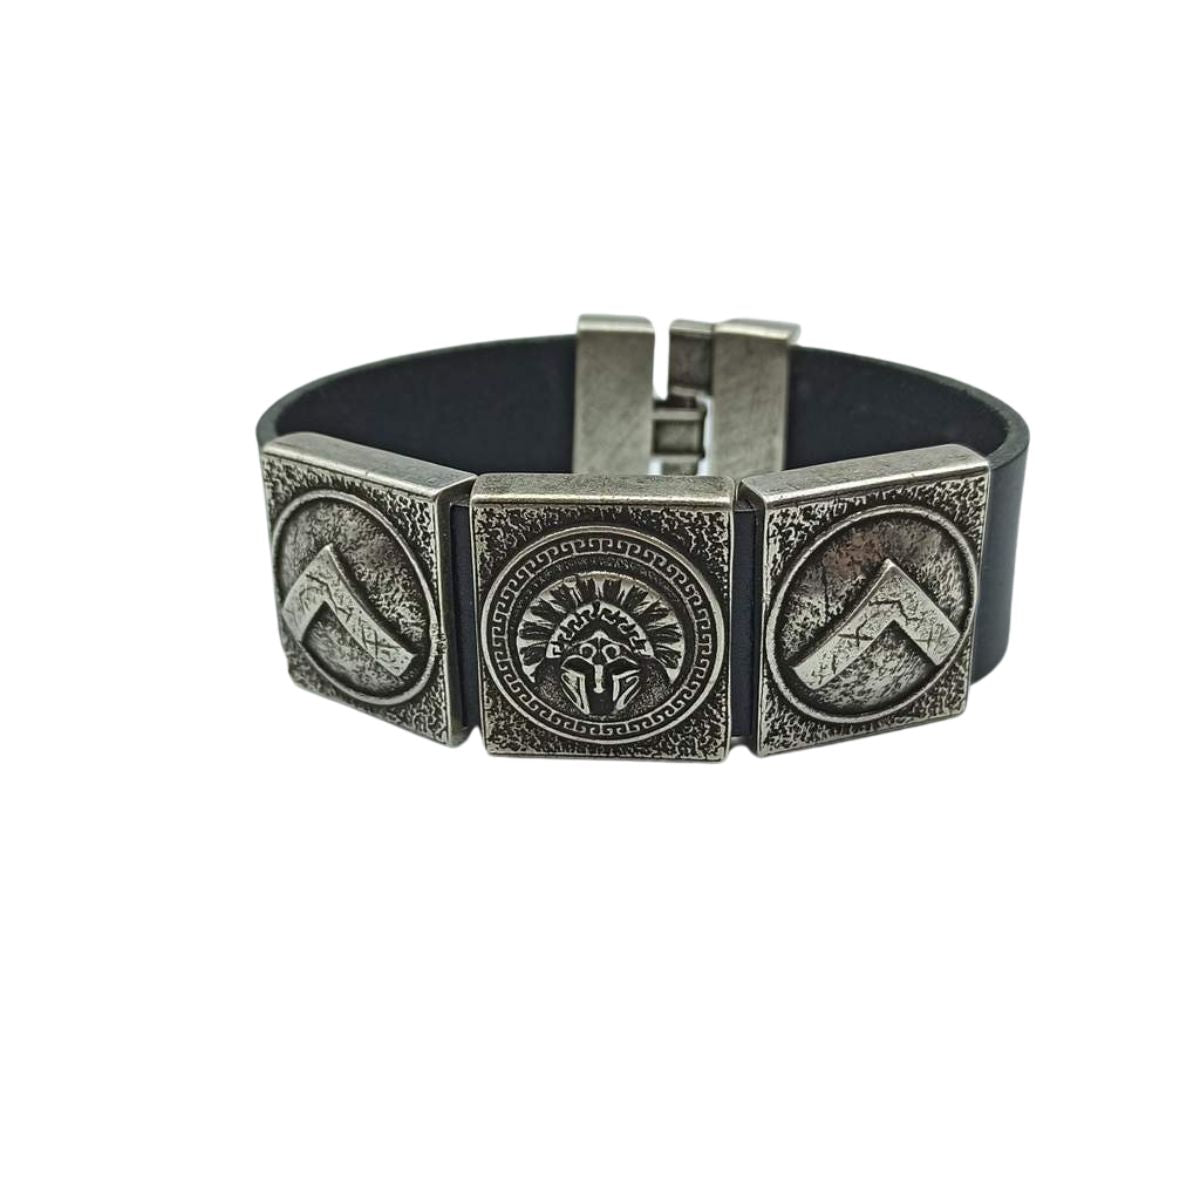 Spartan leather cuff bracelet 16 cm | 6.3 inch Silver plated bronze 